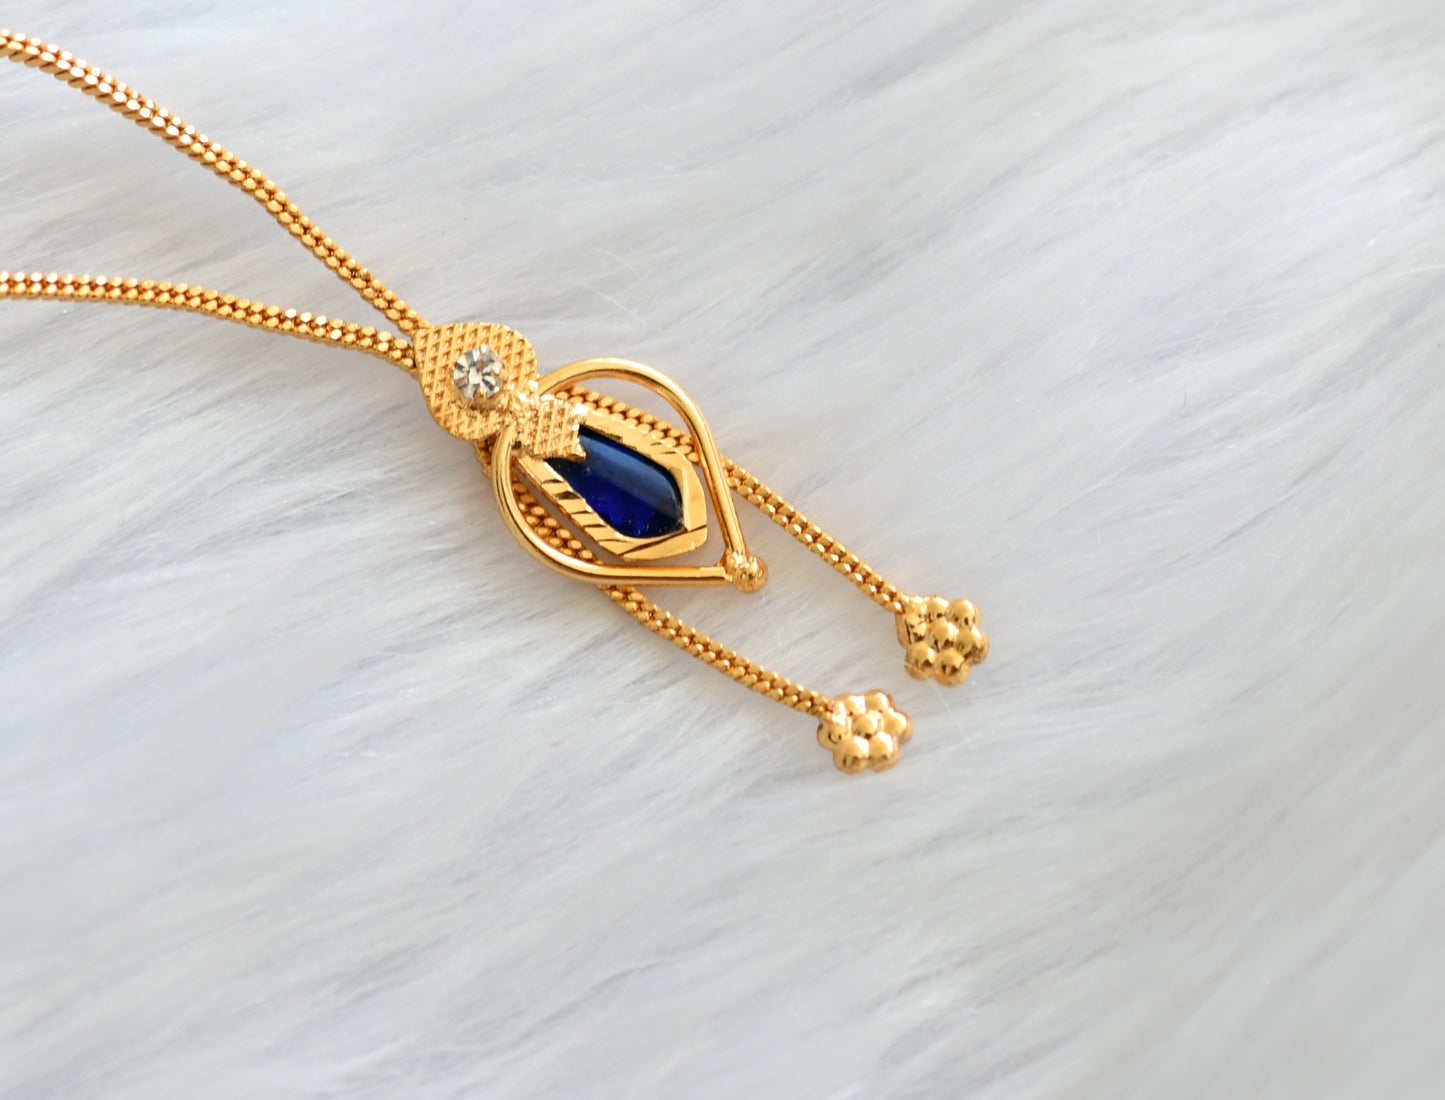 Gold tone white-blue nagapadam Kerala style pendant with chain dj-39415